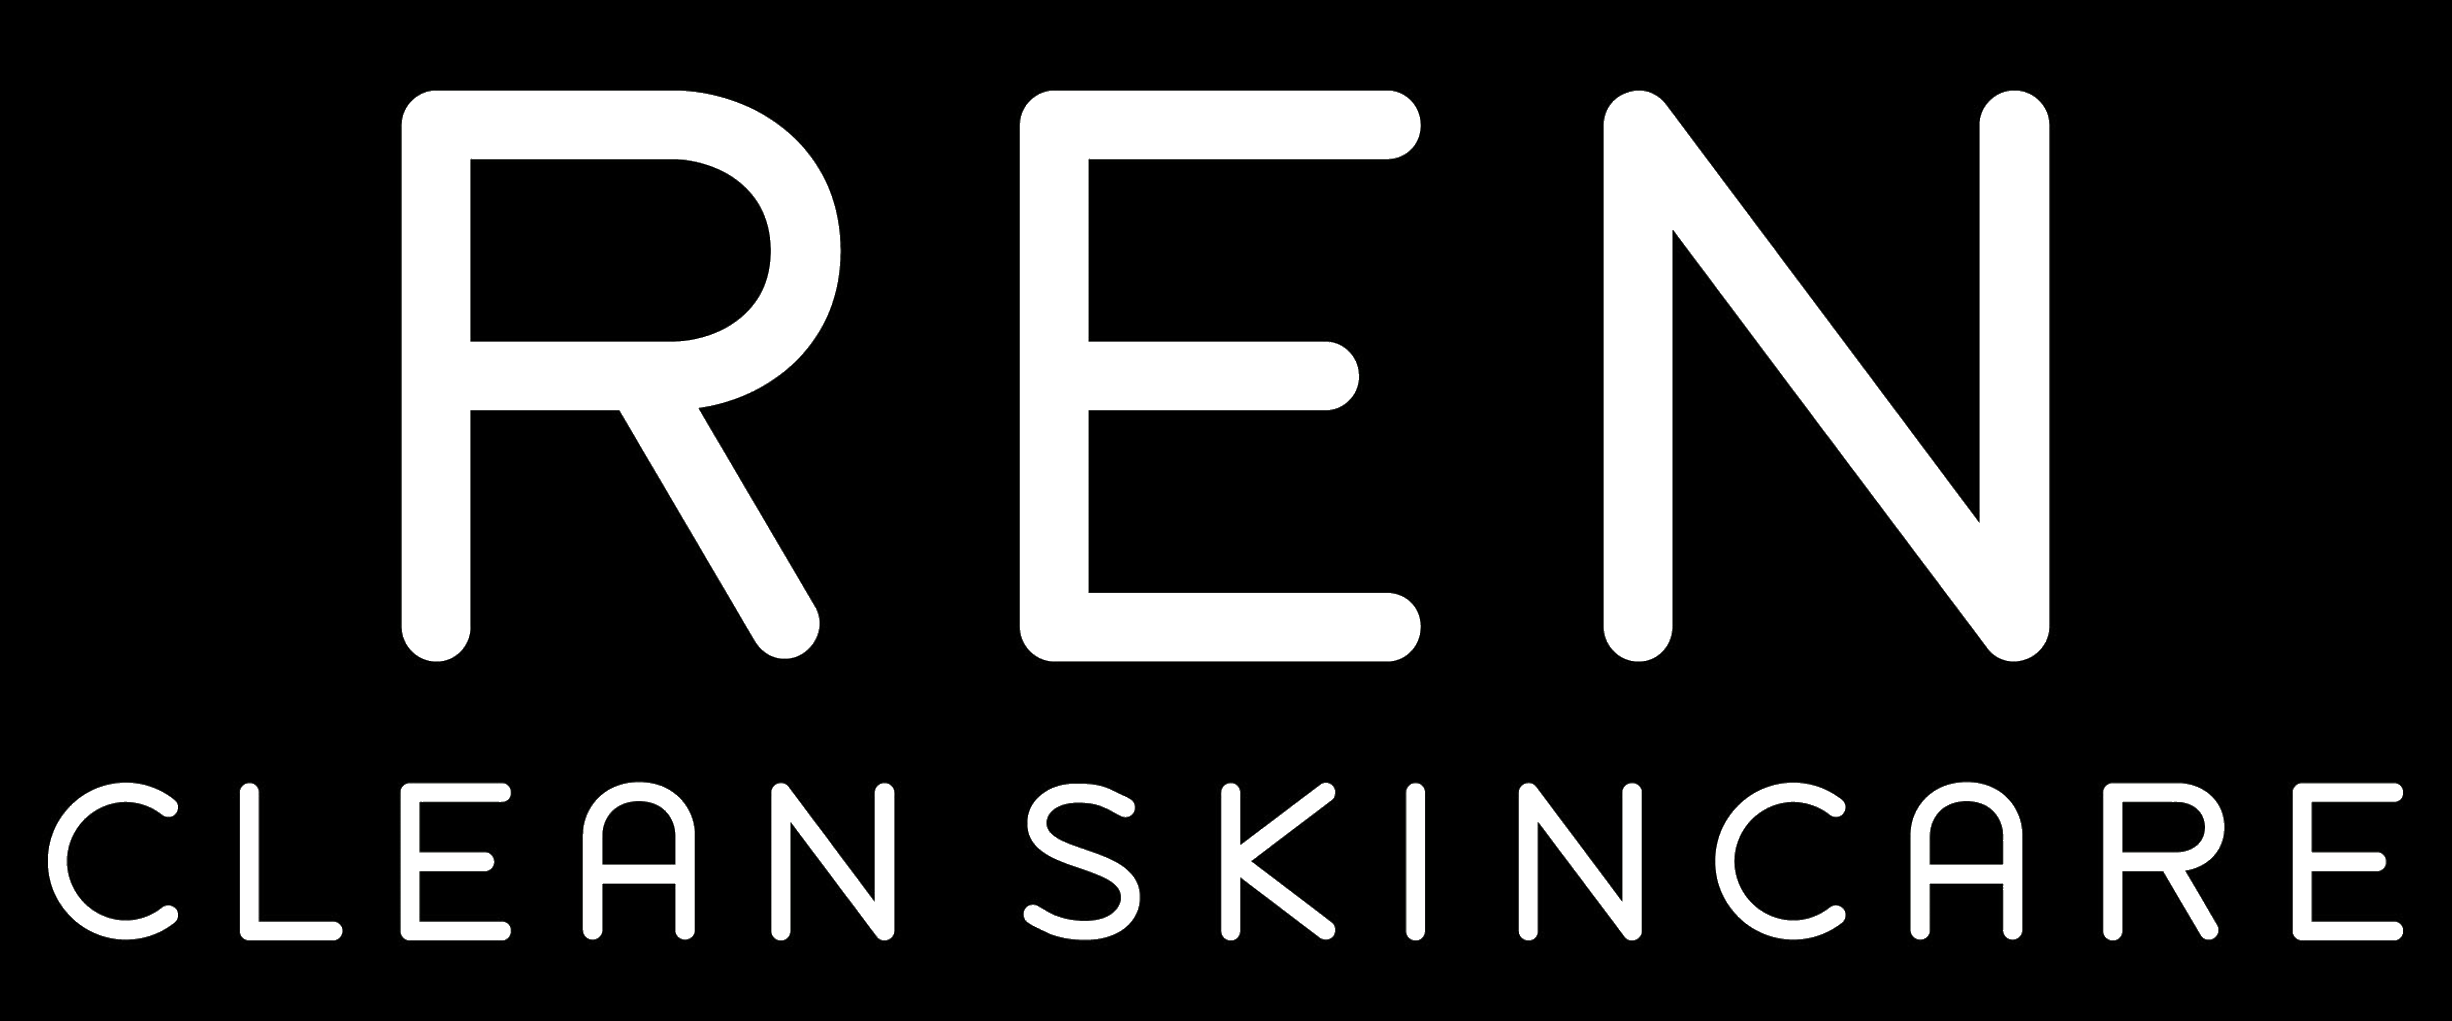 Ren Ren Logo - REN Clean Skincare – Logos Download